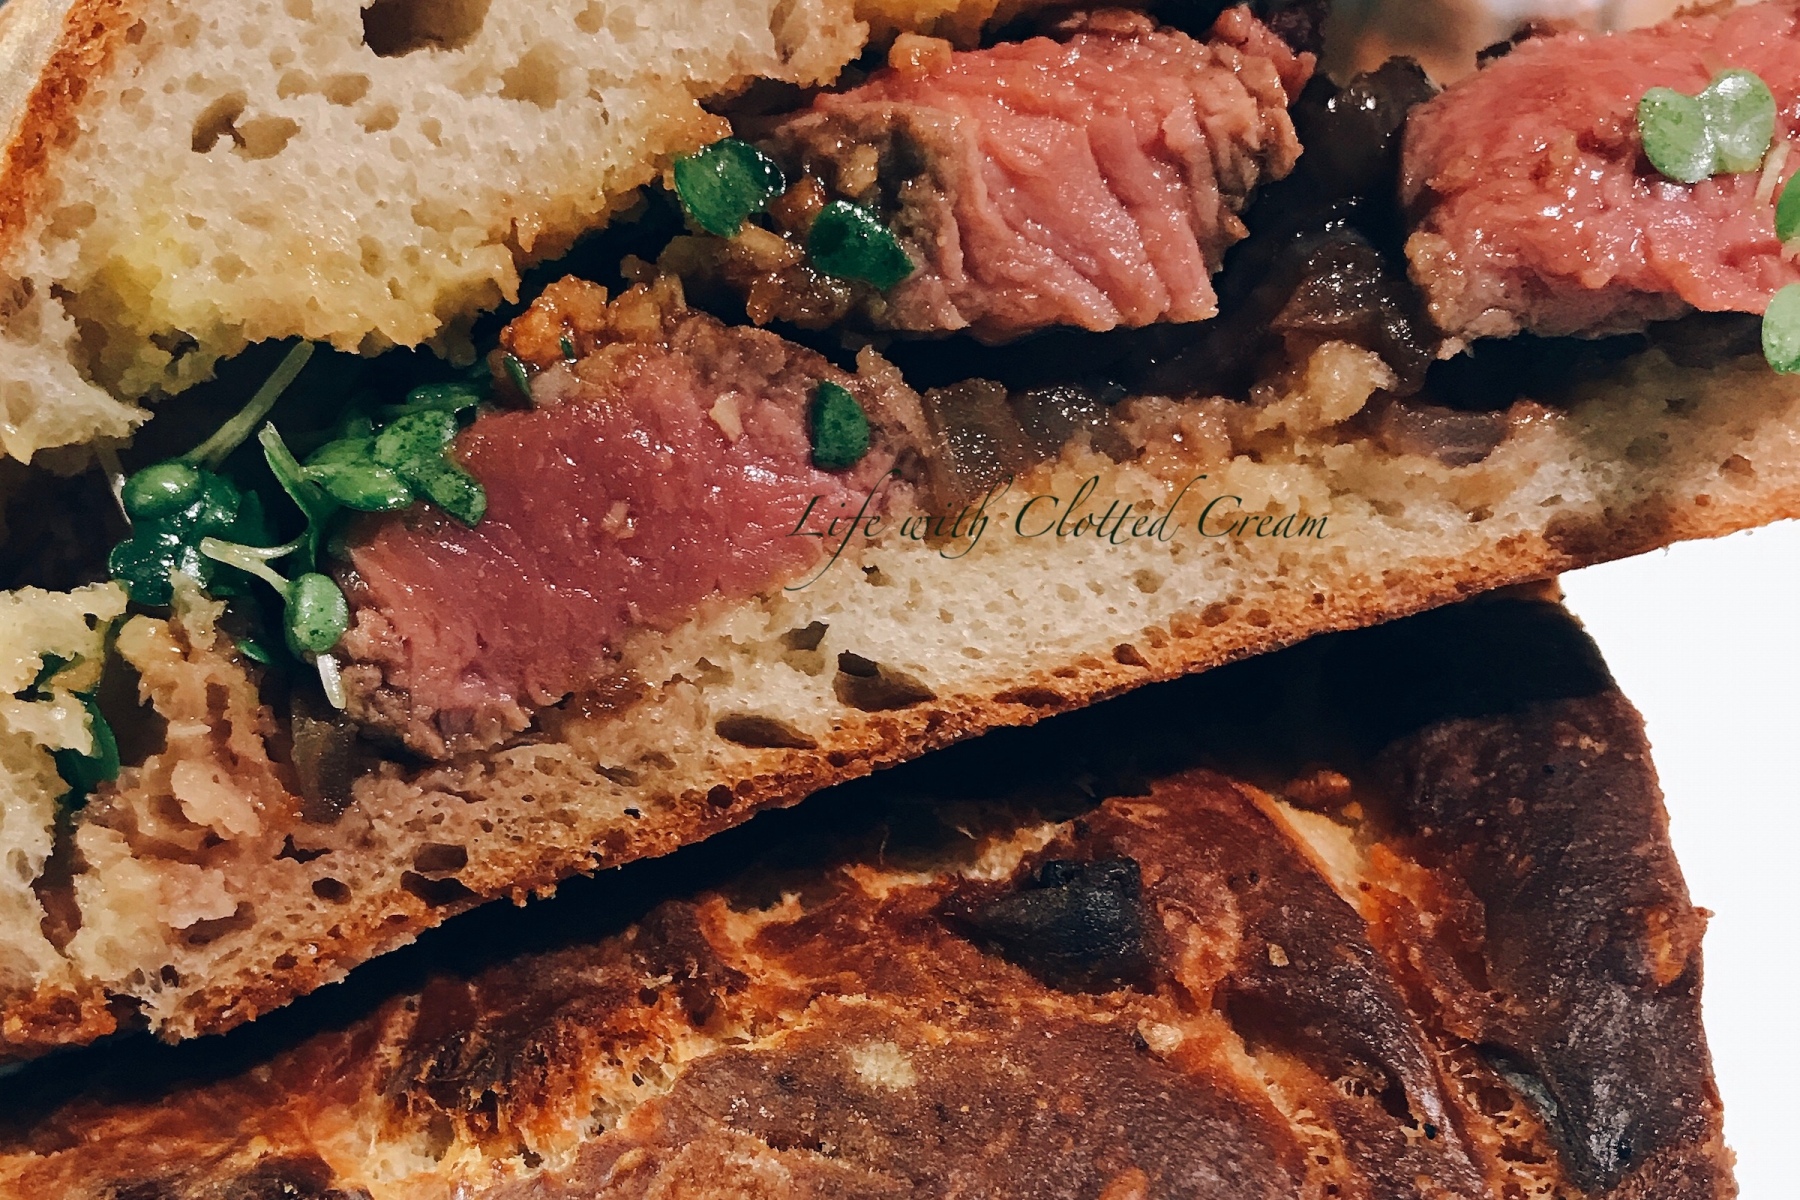 Rare steak sandwich